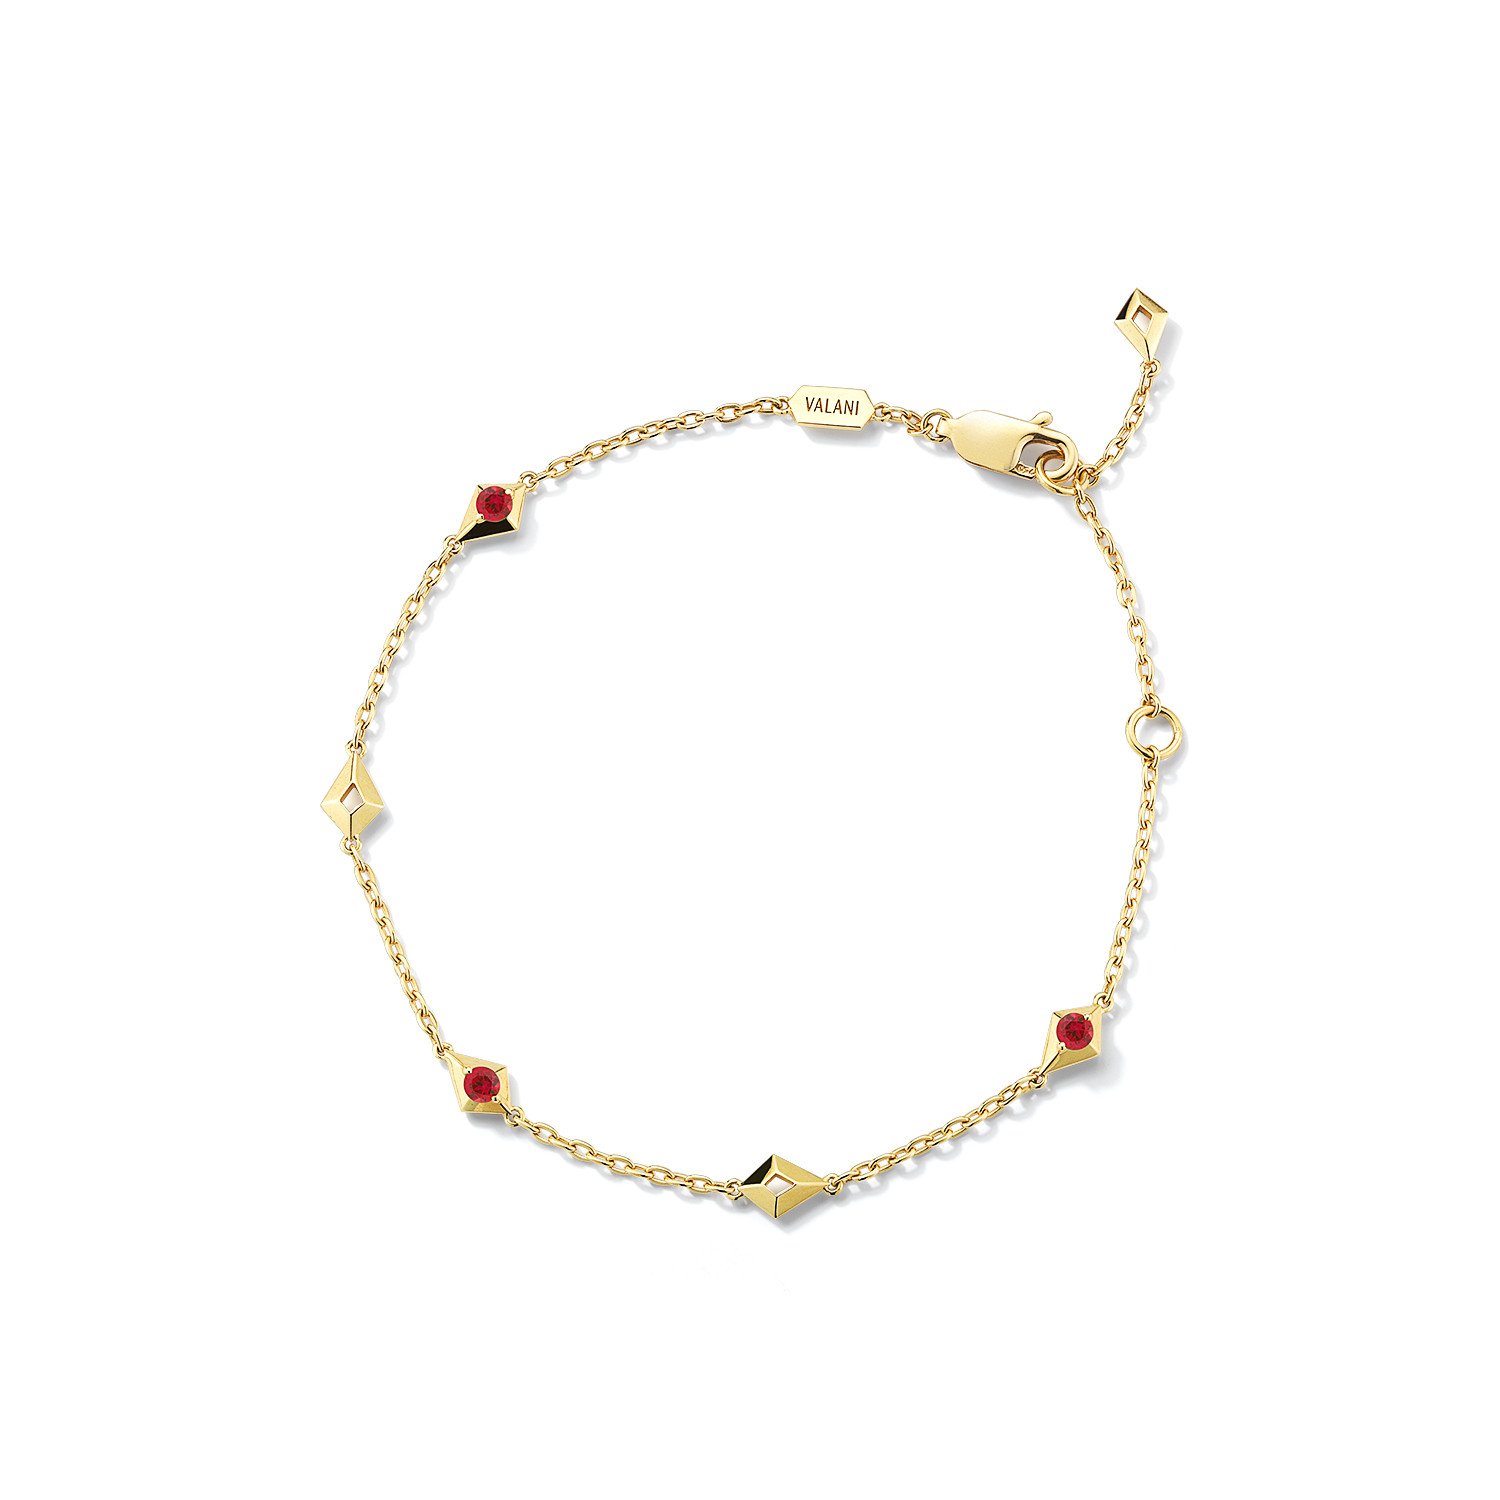 Vohk Ruby Bracelet by Valani Atelier. 18K Yellow Gold and Rubies